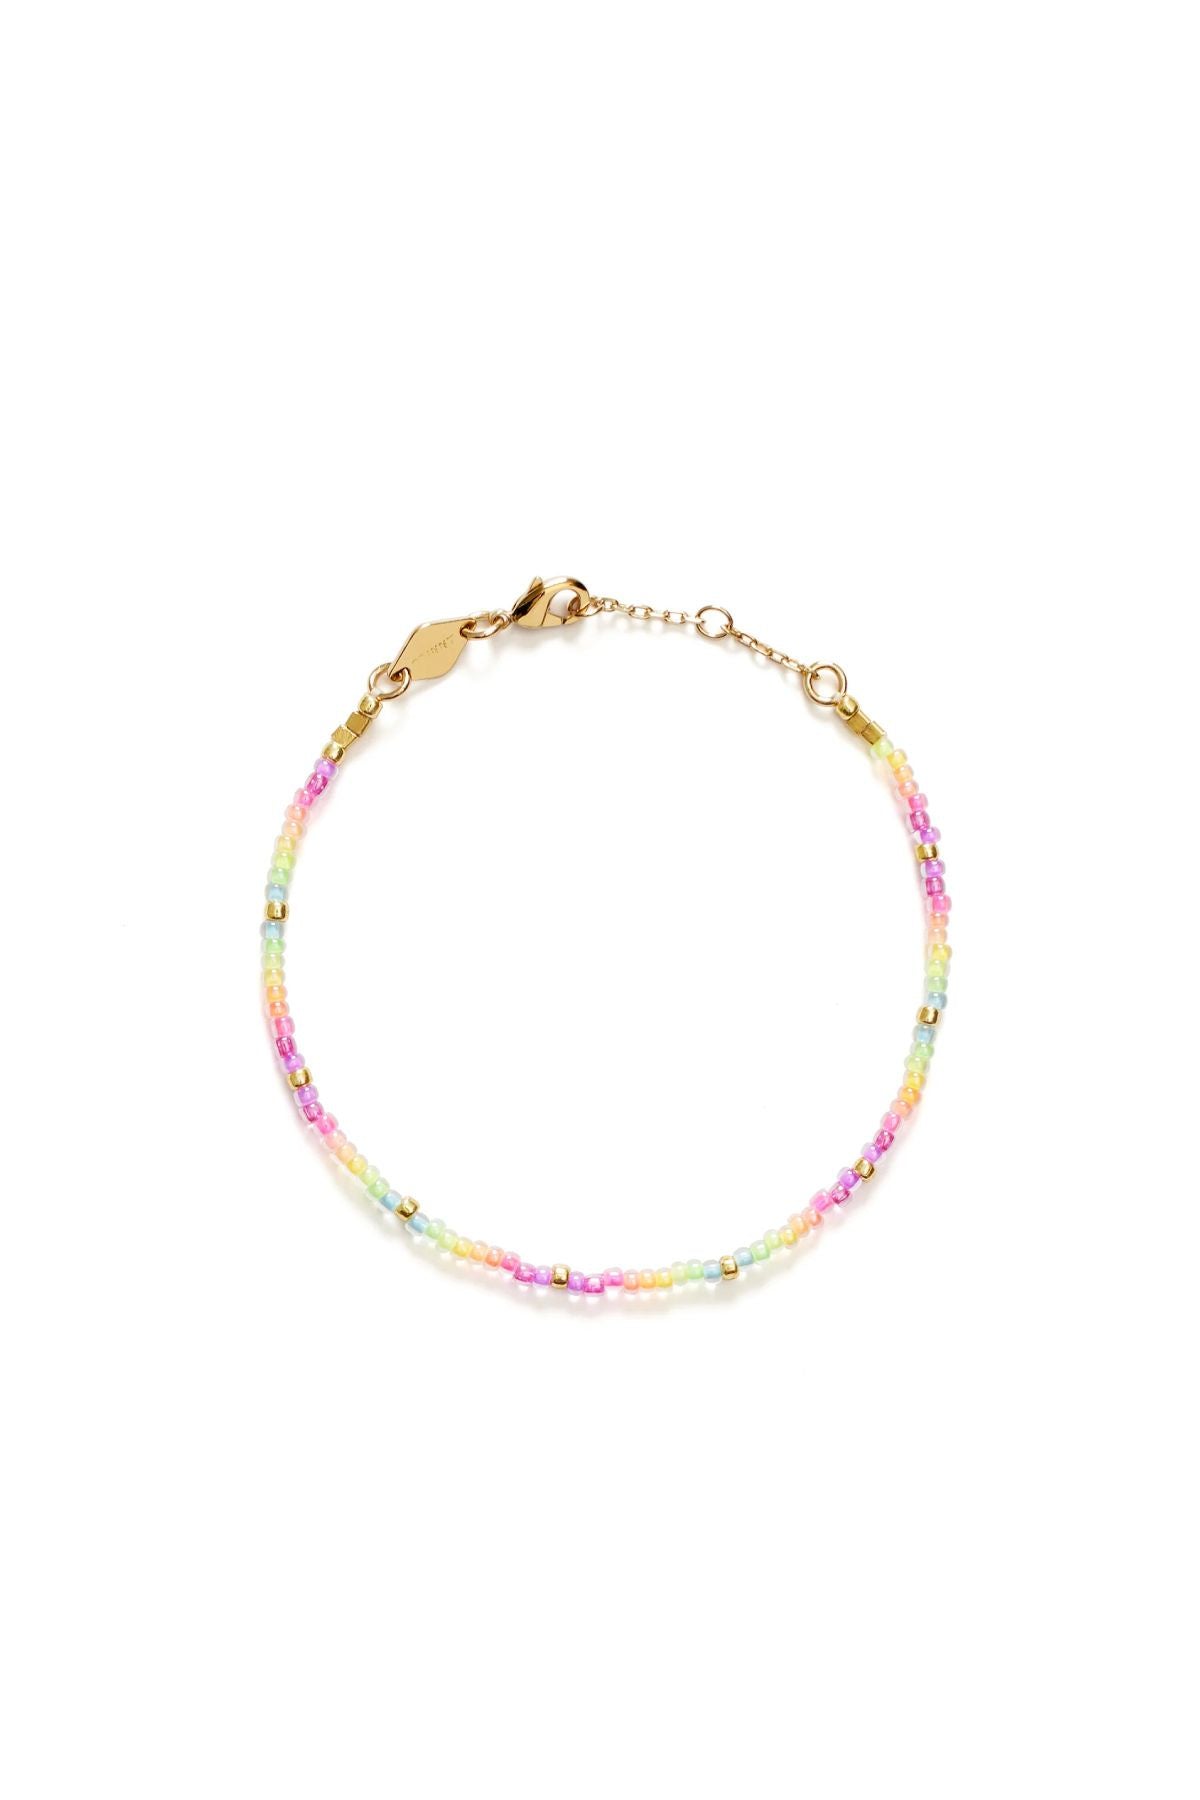 Anni Lu Neon Rainbow Bracelet - Gold